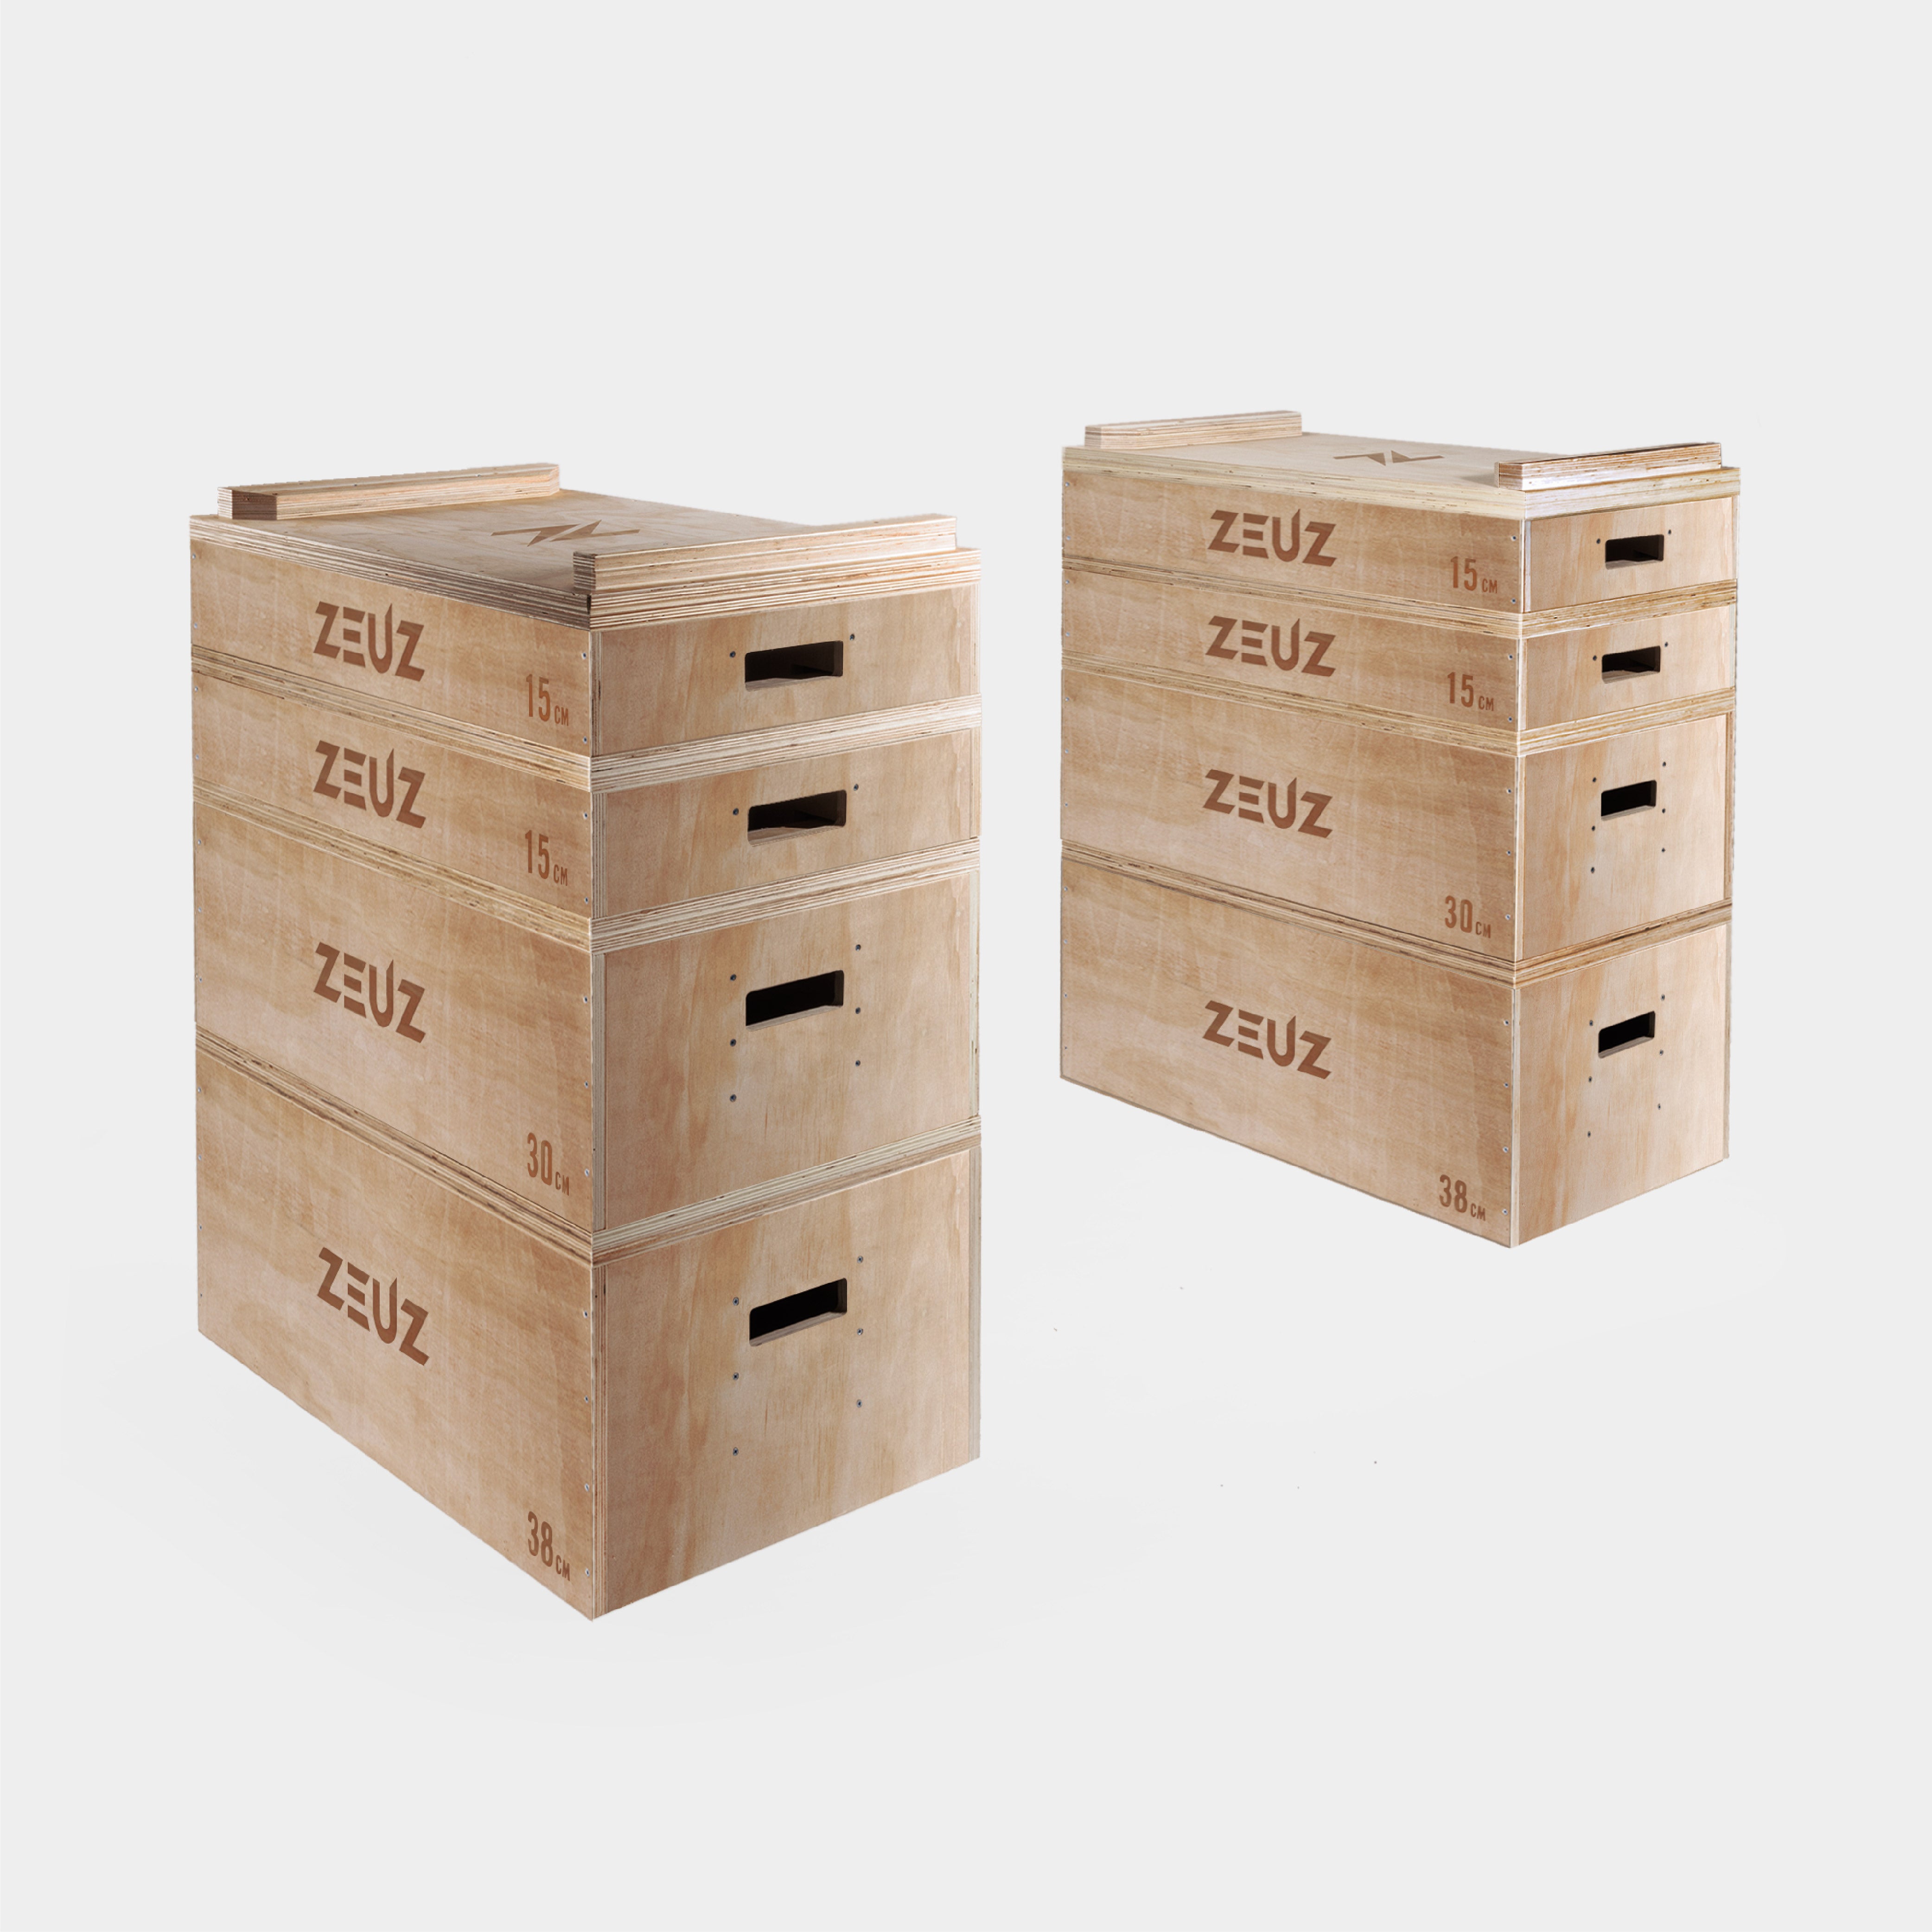 ZEUZ Wooden Stackable Jerk Blocks Set - Blocks - For Weightlifting, Fitness & Weightlifting - 98 CM High